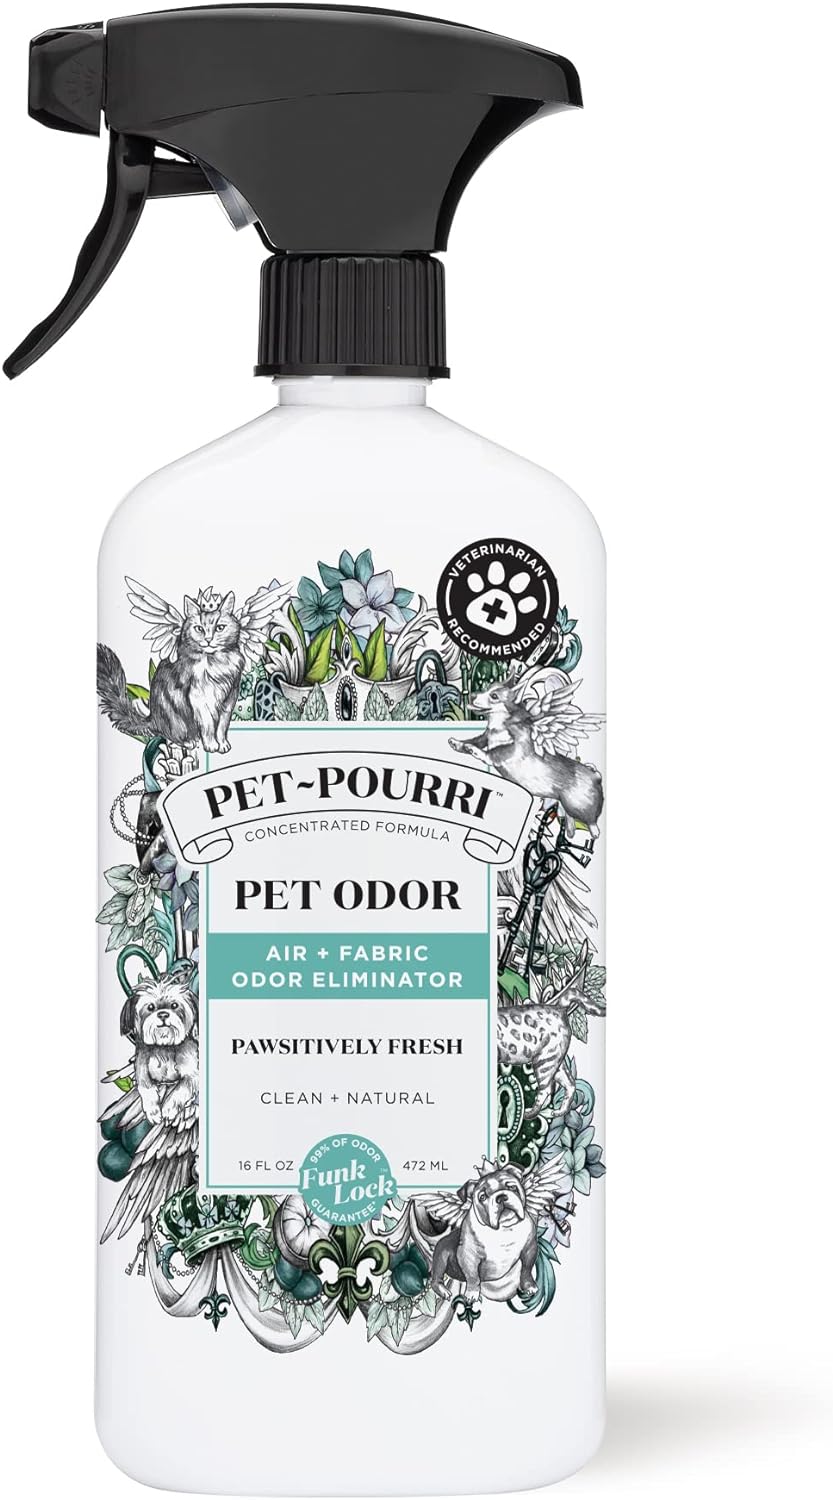 $9.48 /w S&S: Pet-Pourri Pet Odor Air + Fabric Odor Eliminator Spray, Pawsitively Fresh, 16 Fl Oz Amazon